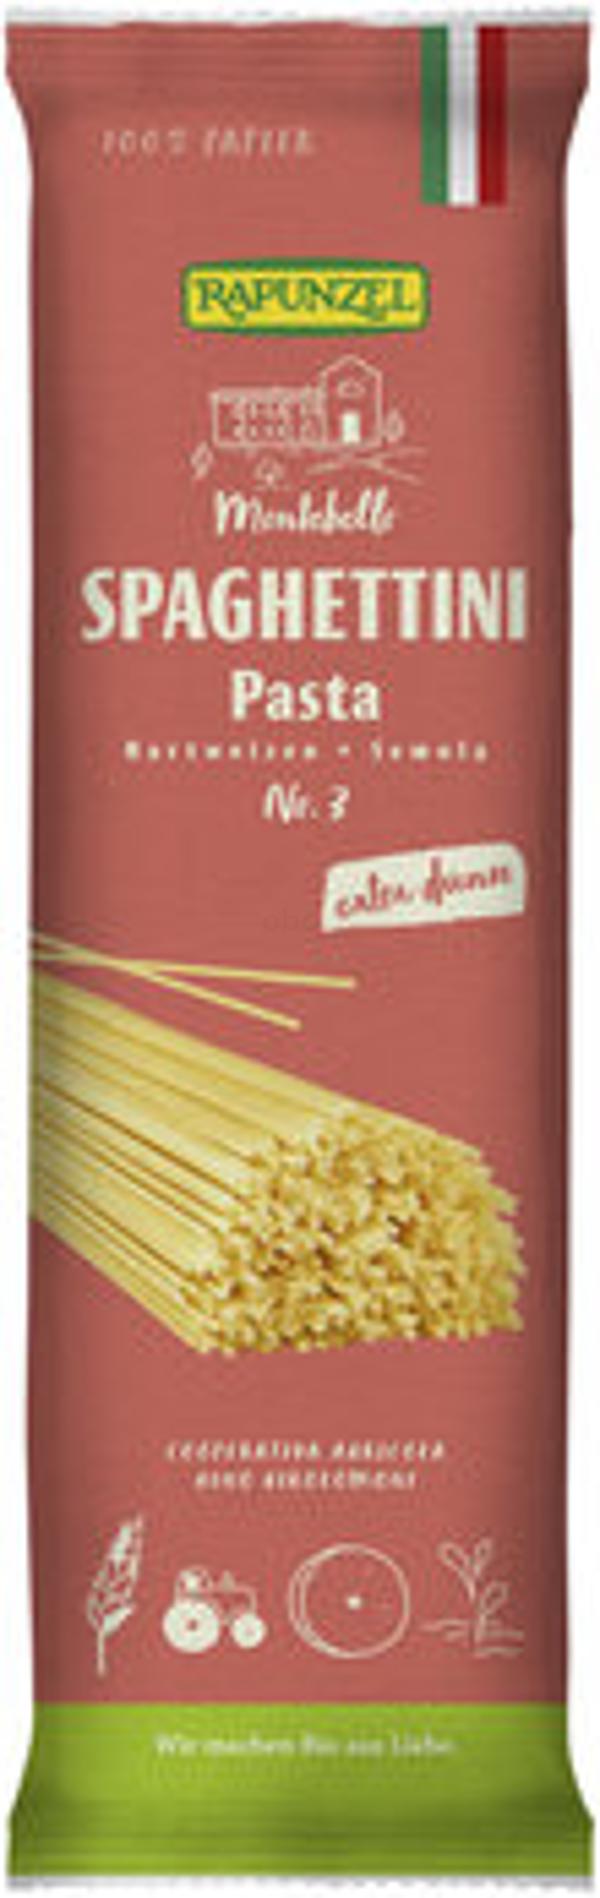 Produktfoto zu Spaghettini Semola No.3, 500g